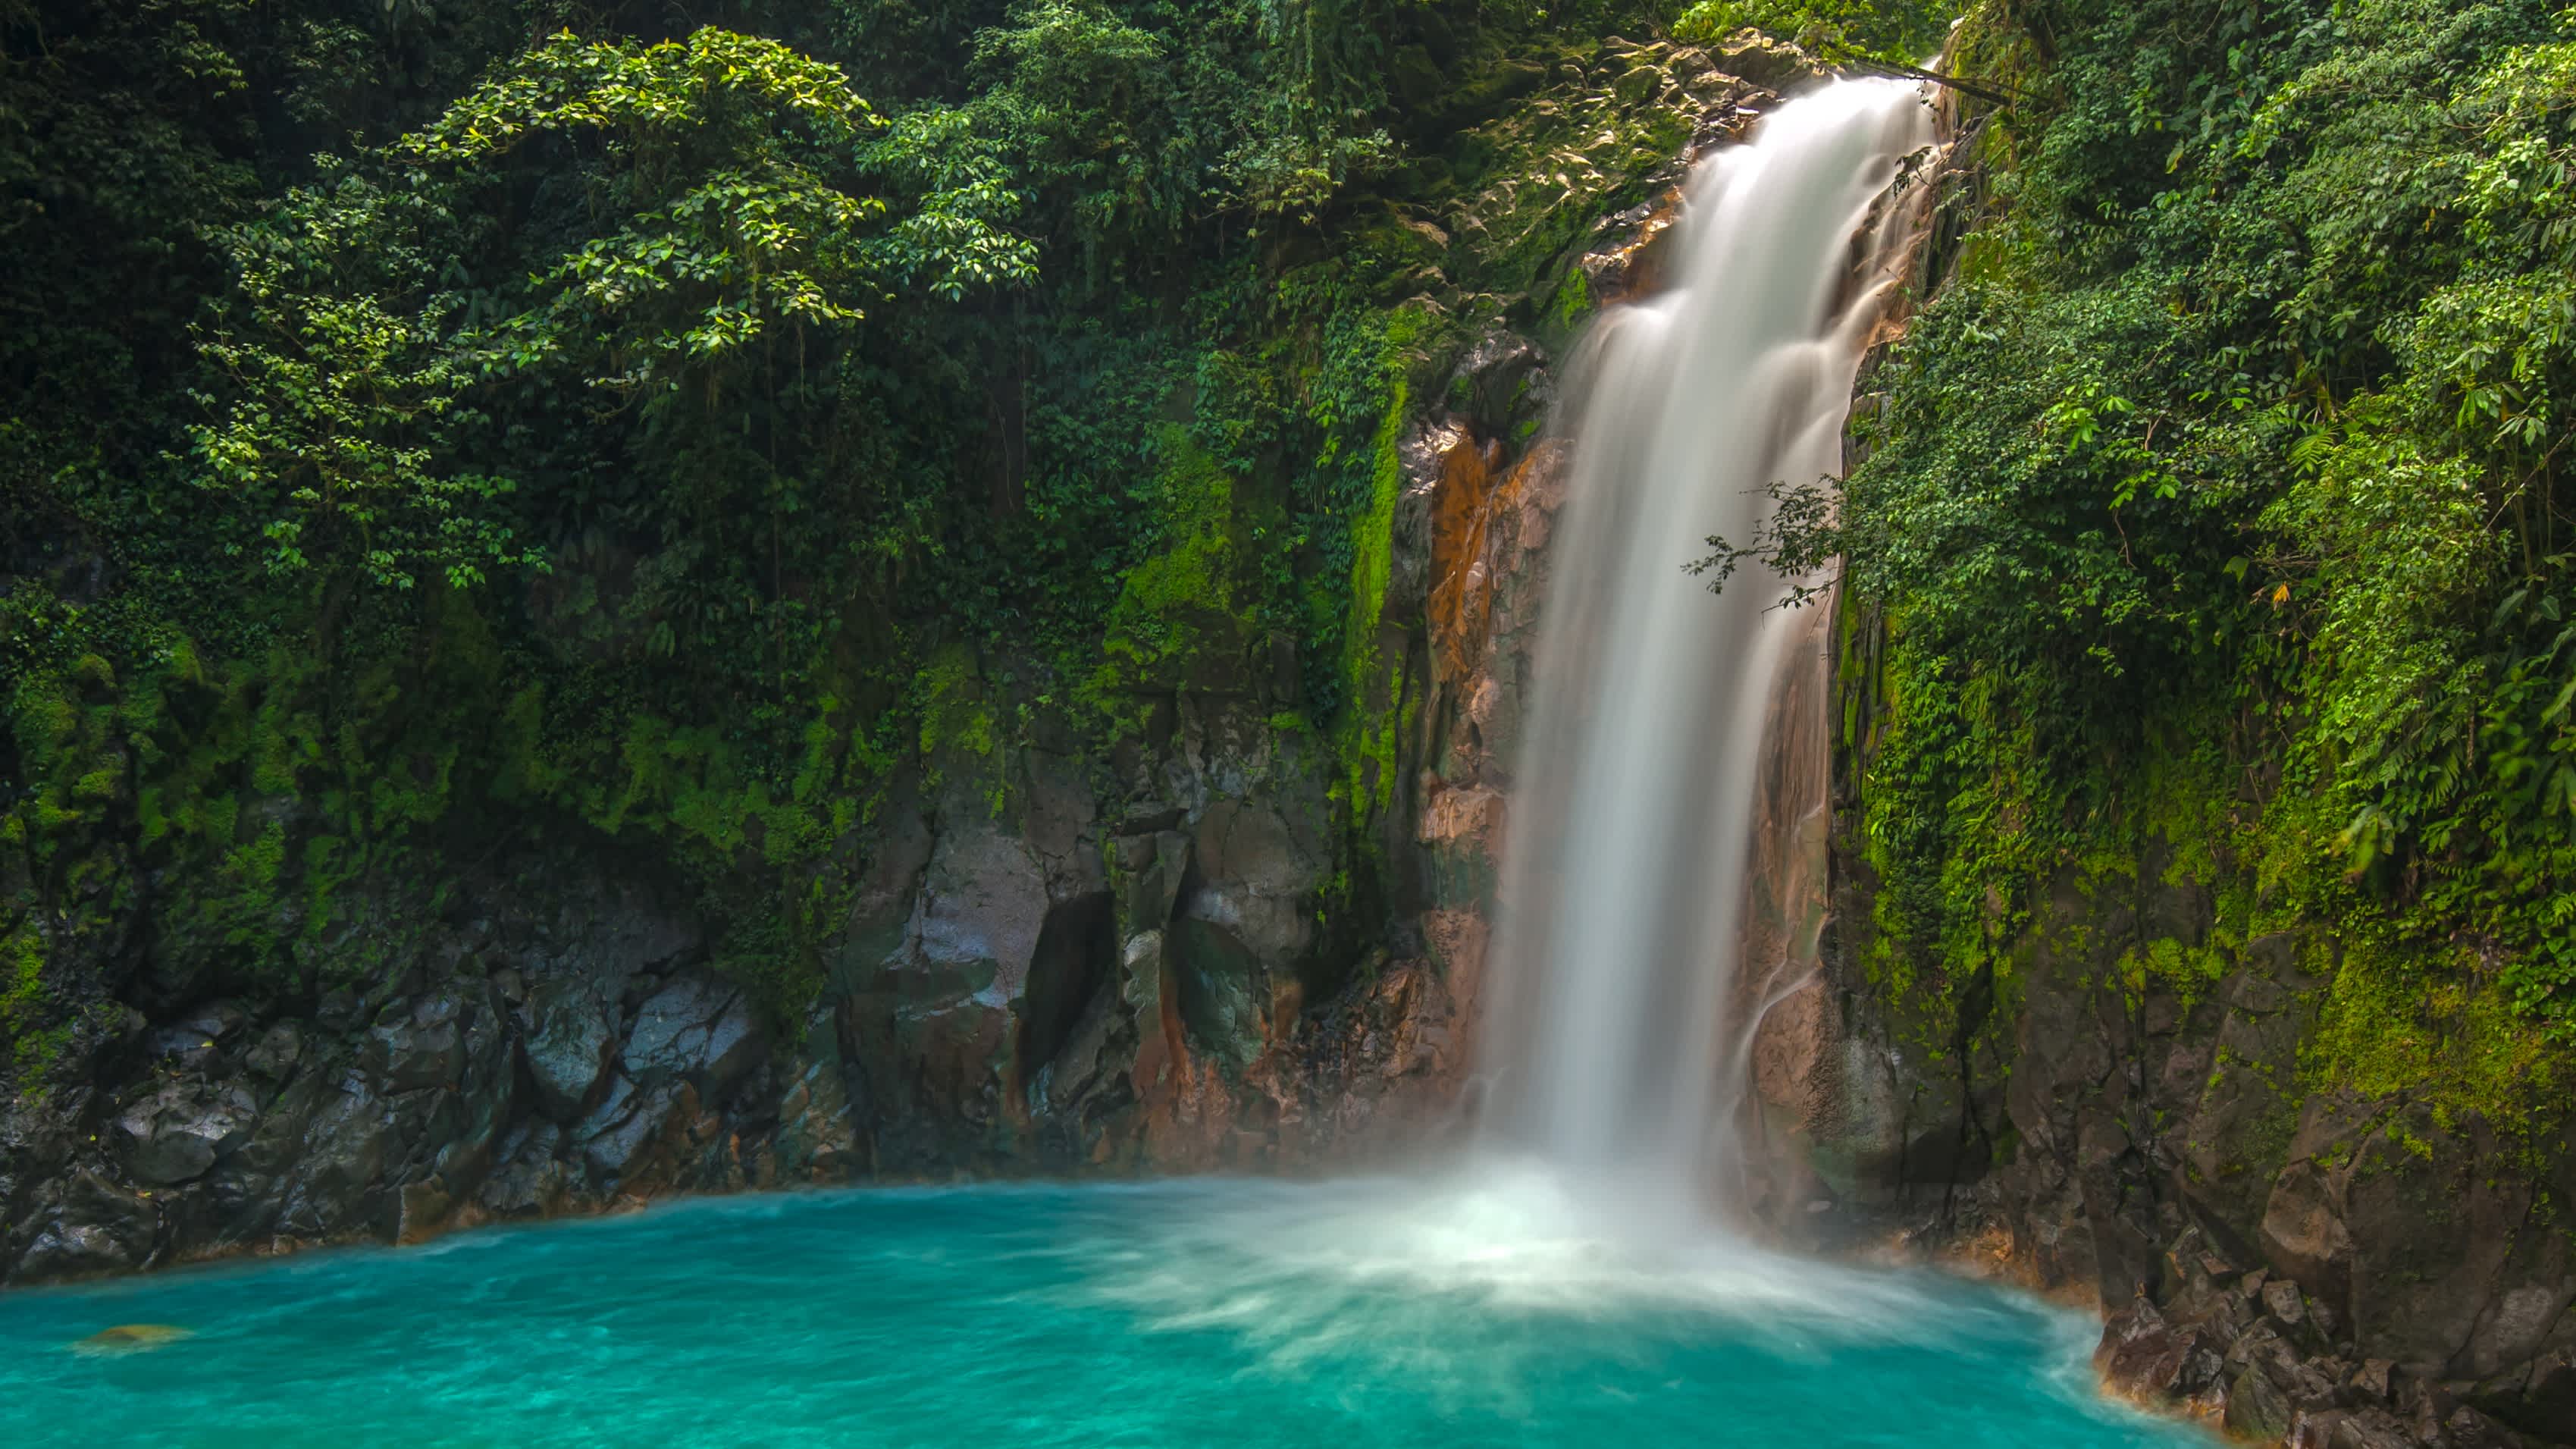 Blick zum Rio Celeste Wasserfall im Tenorio Nationalpark, Costa Rica

